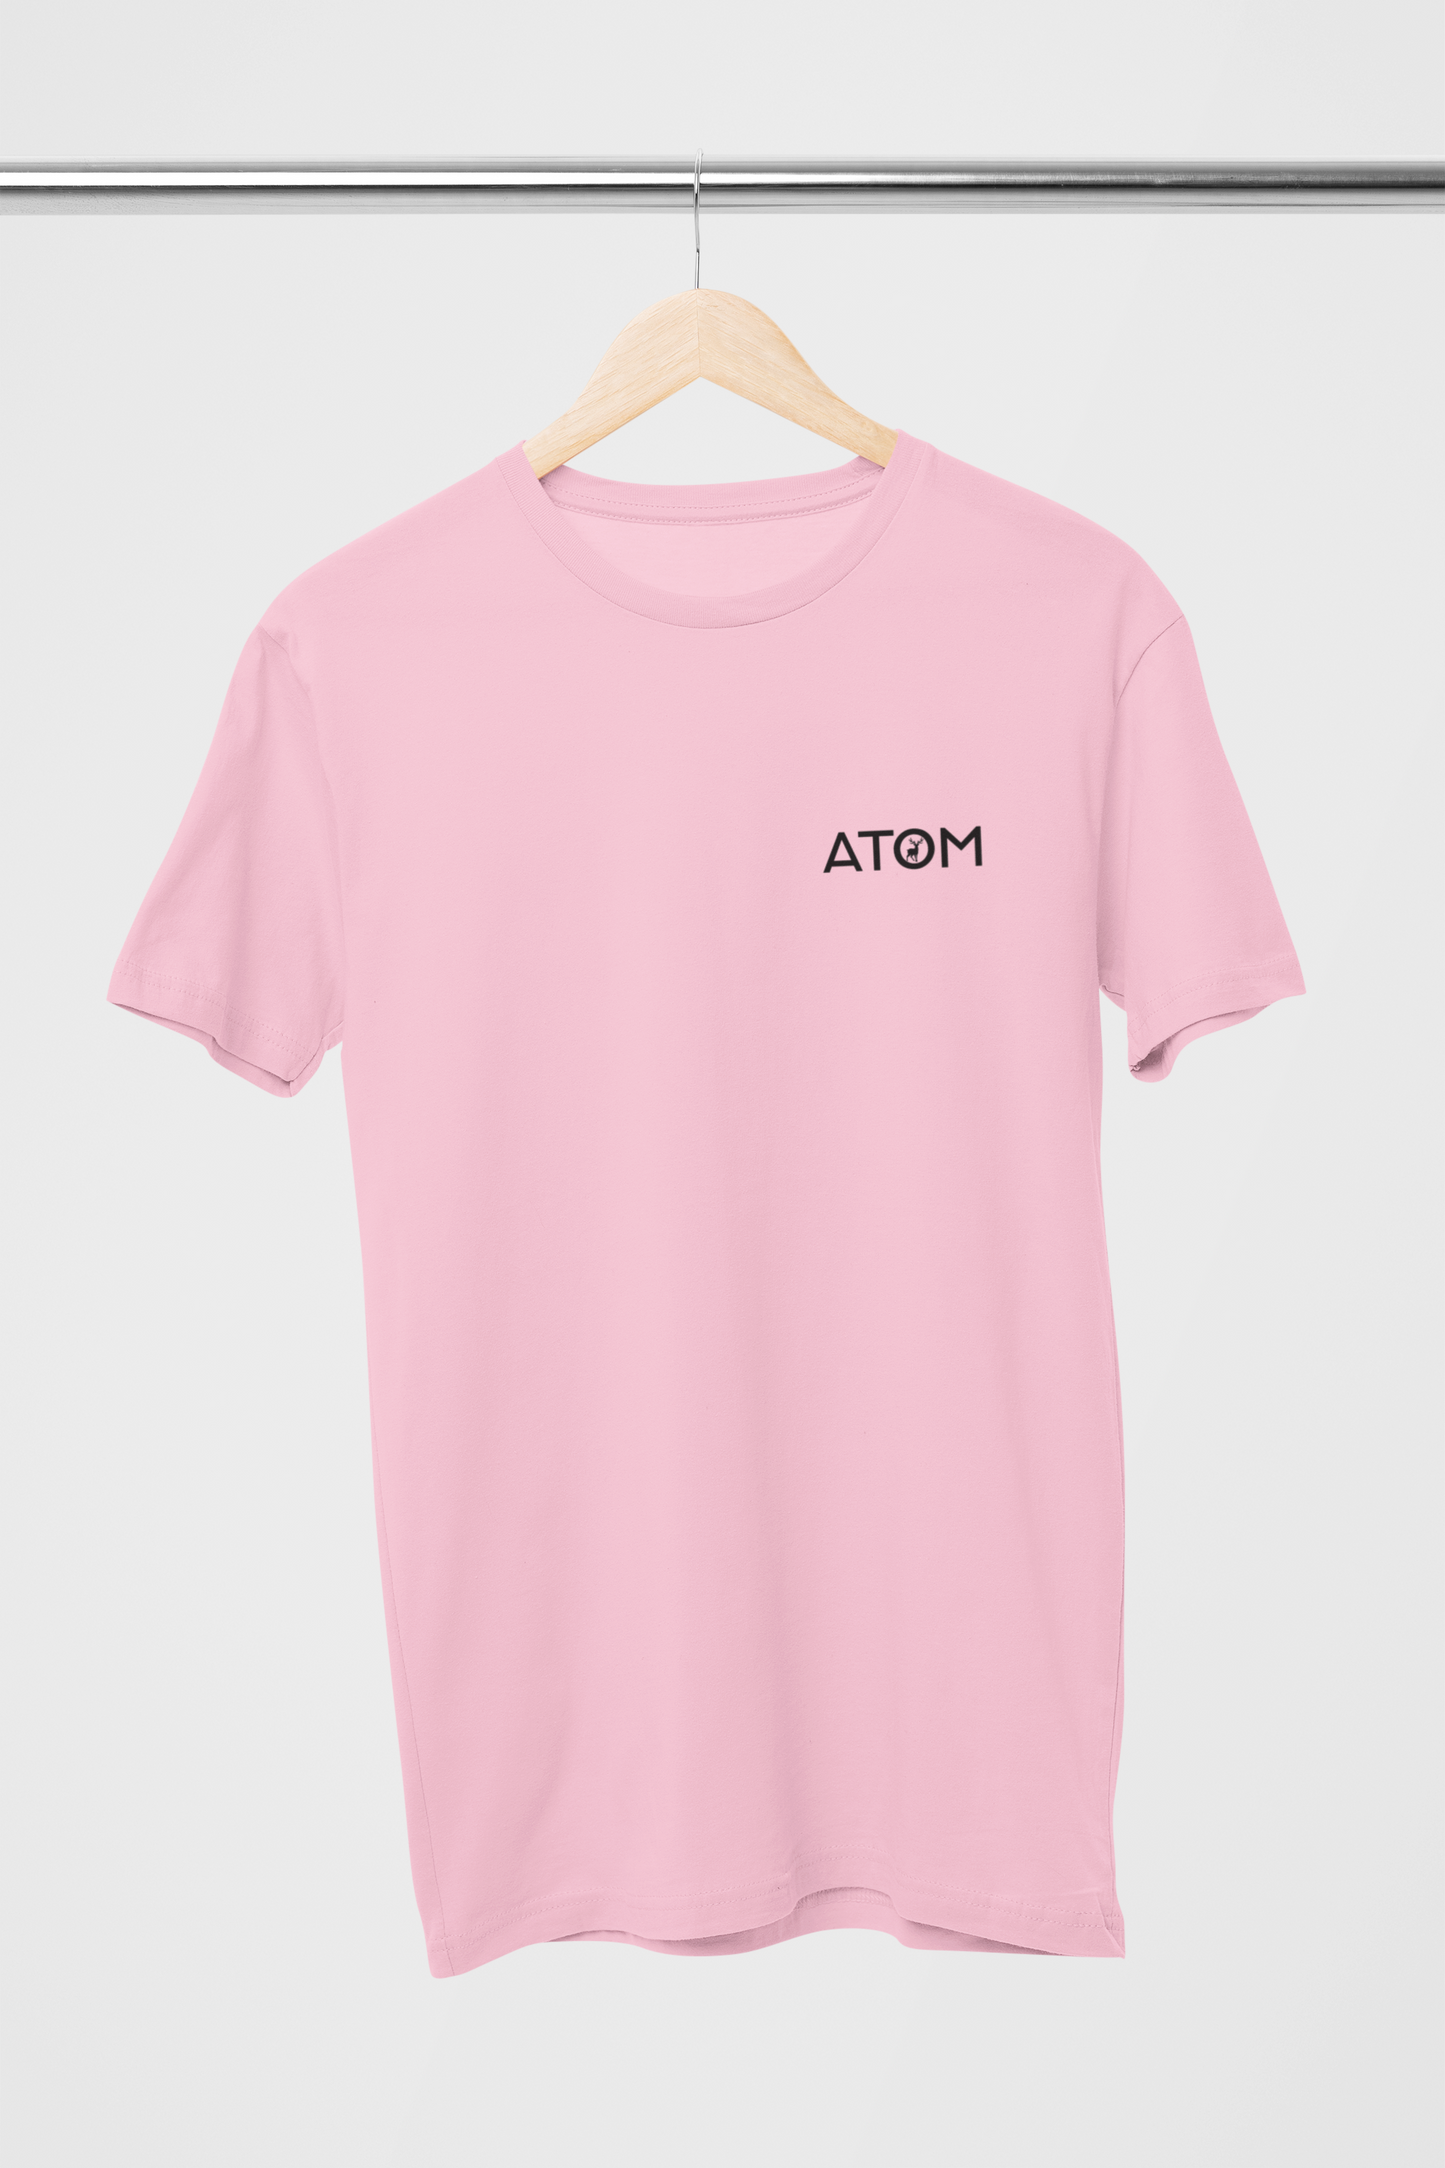 ATOM Logo Basic Pink T-Shirt For Men